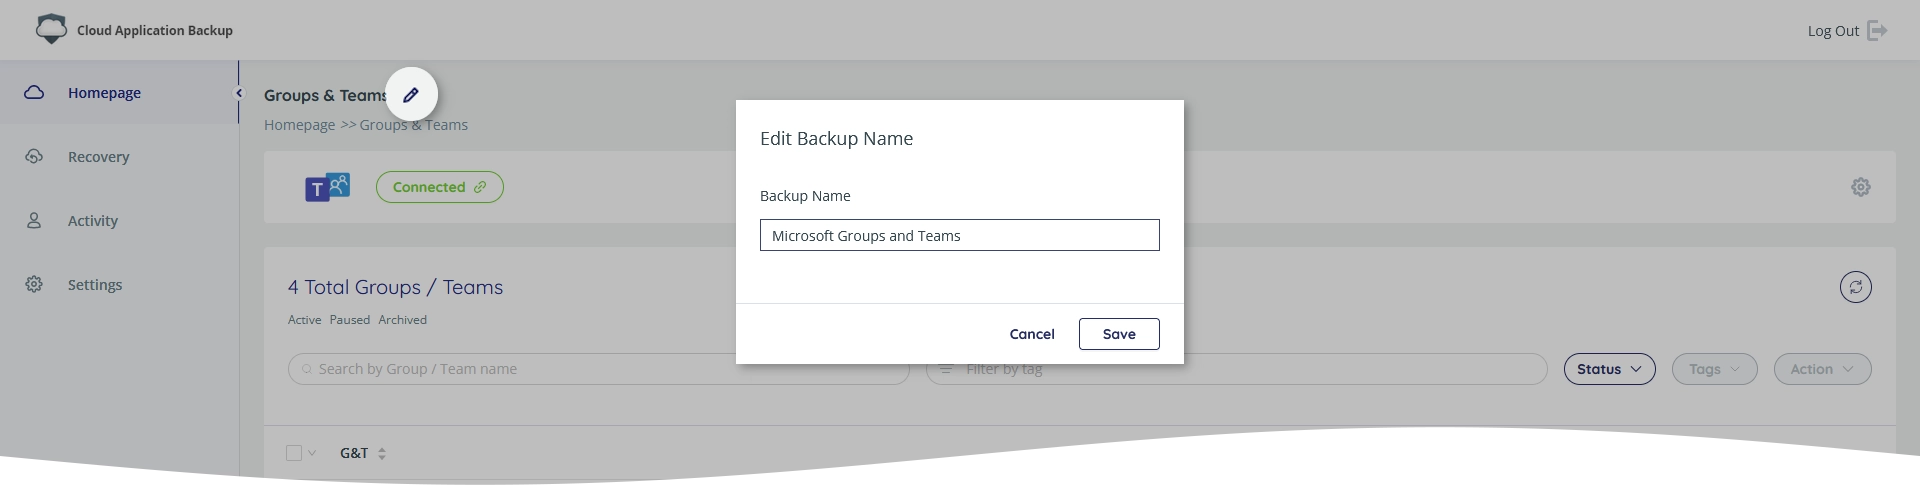 Change backup task name